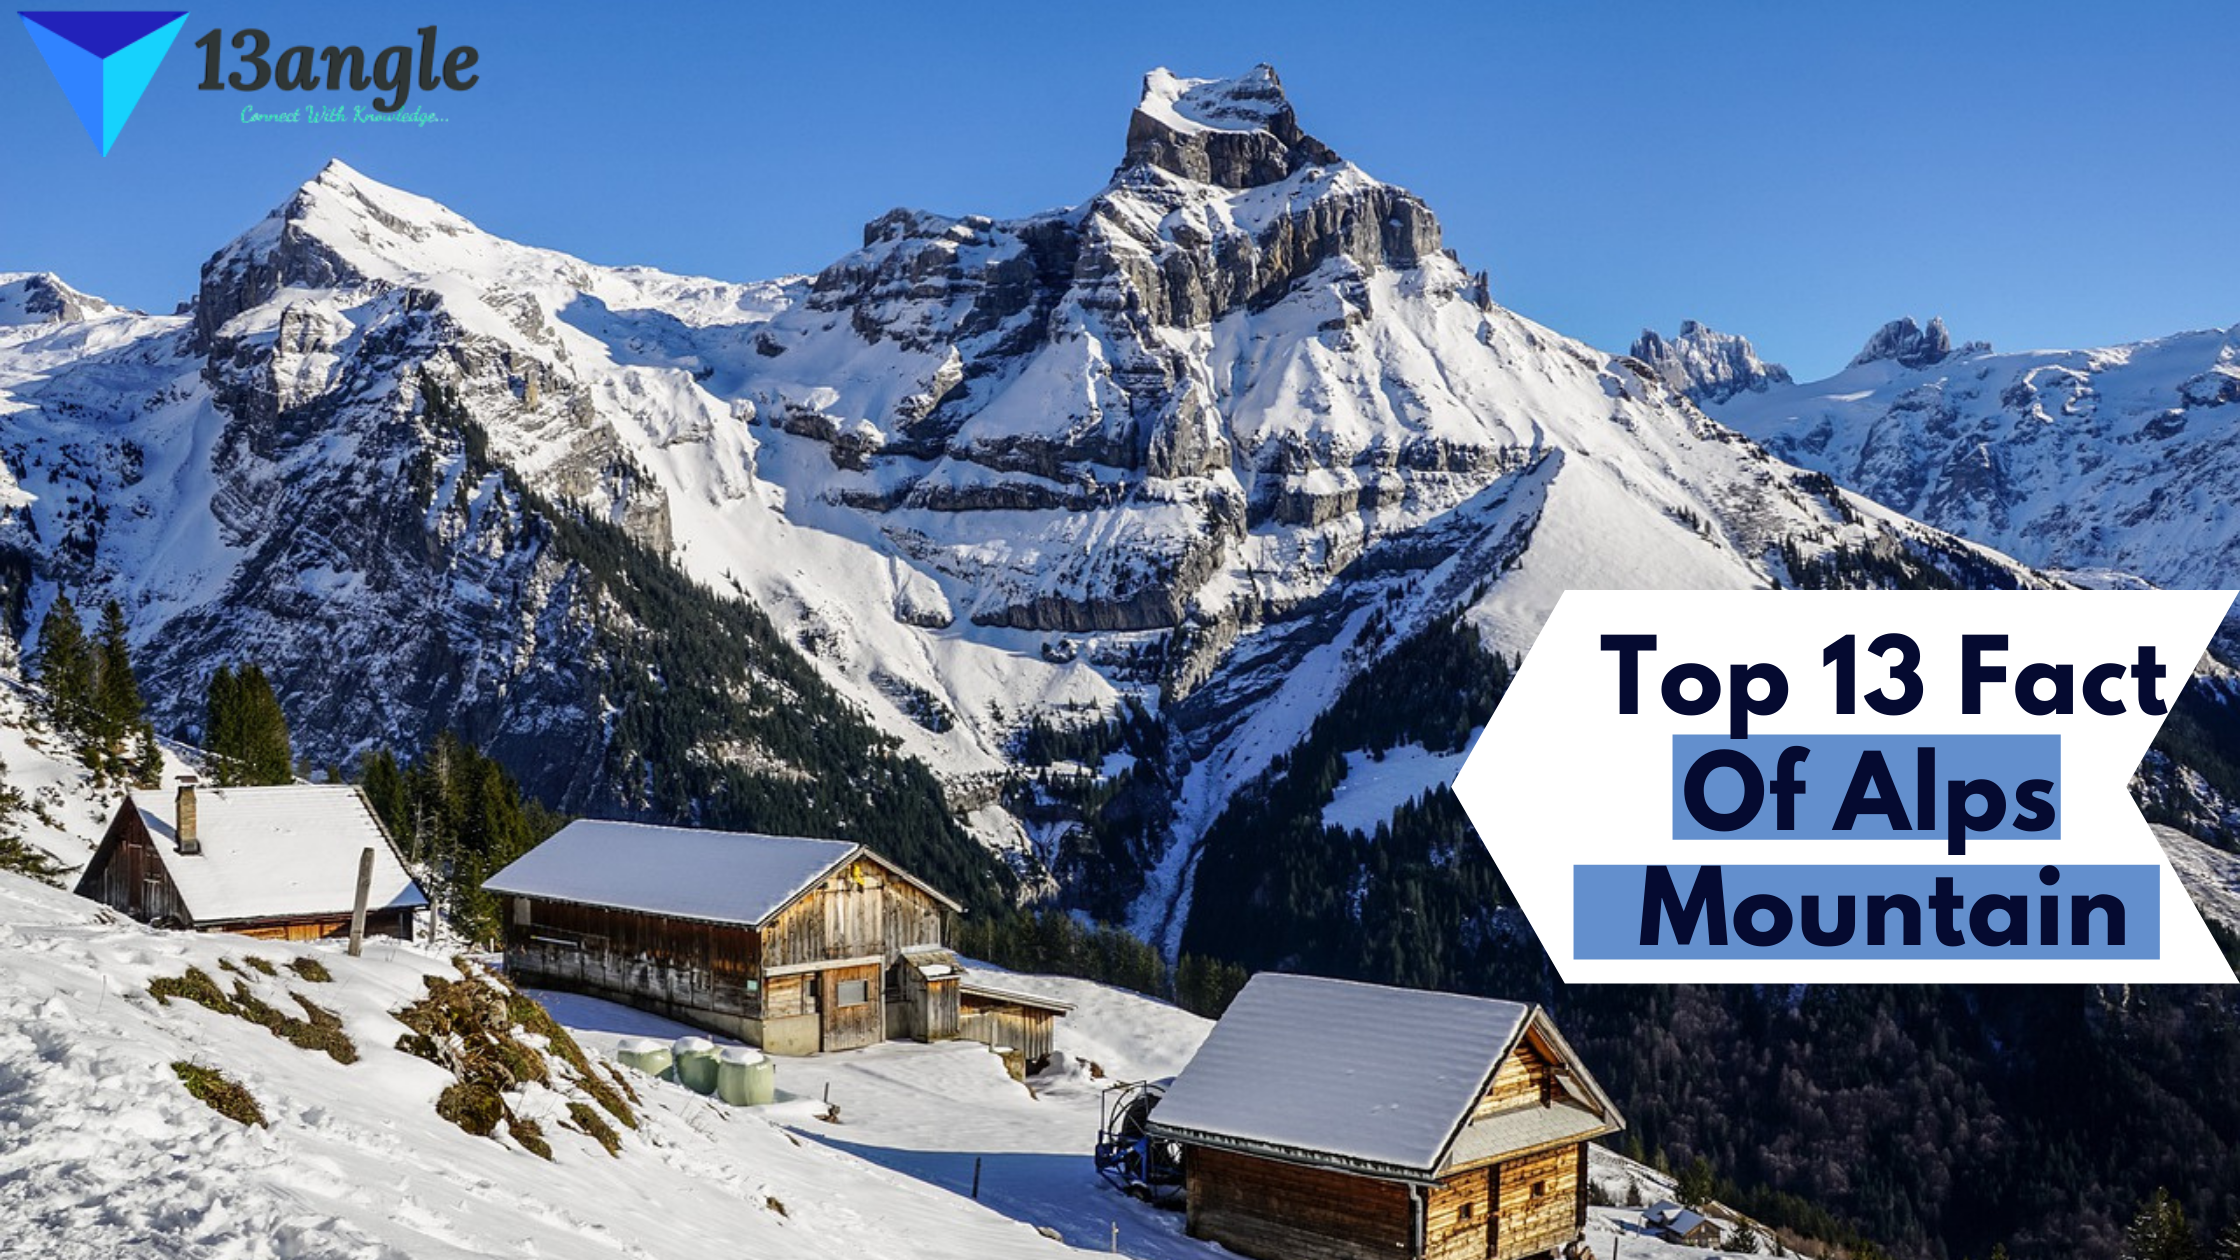 top 13 fact of alps mountain- 13angle.com